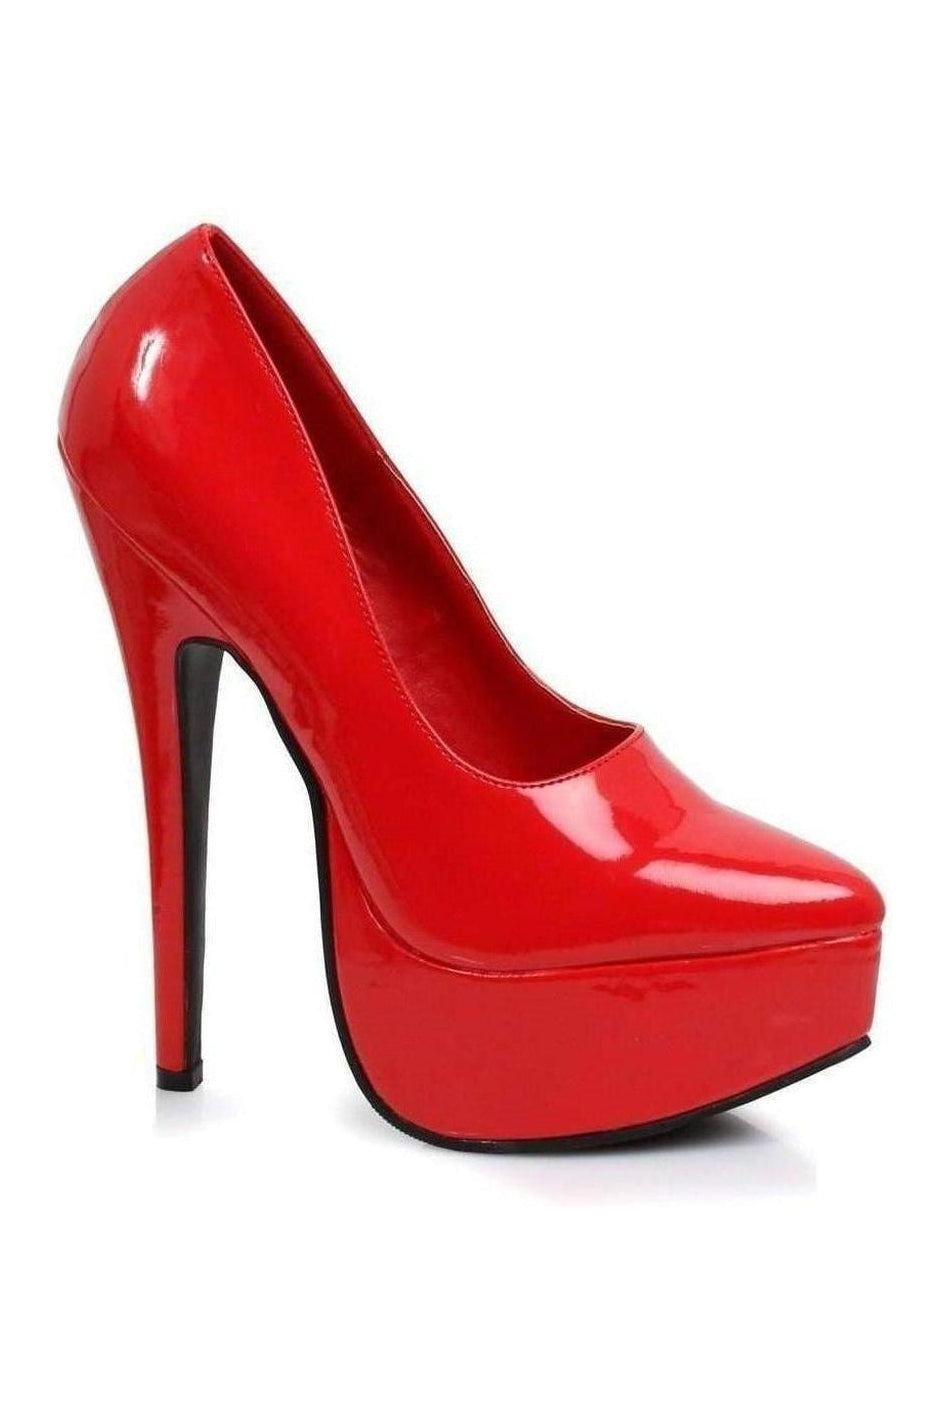 652-PRINCE Platform Pump | Red Patent-Pumps- Stripper Shoes at SEXYSHOES.COM